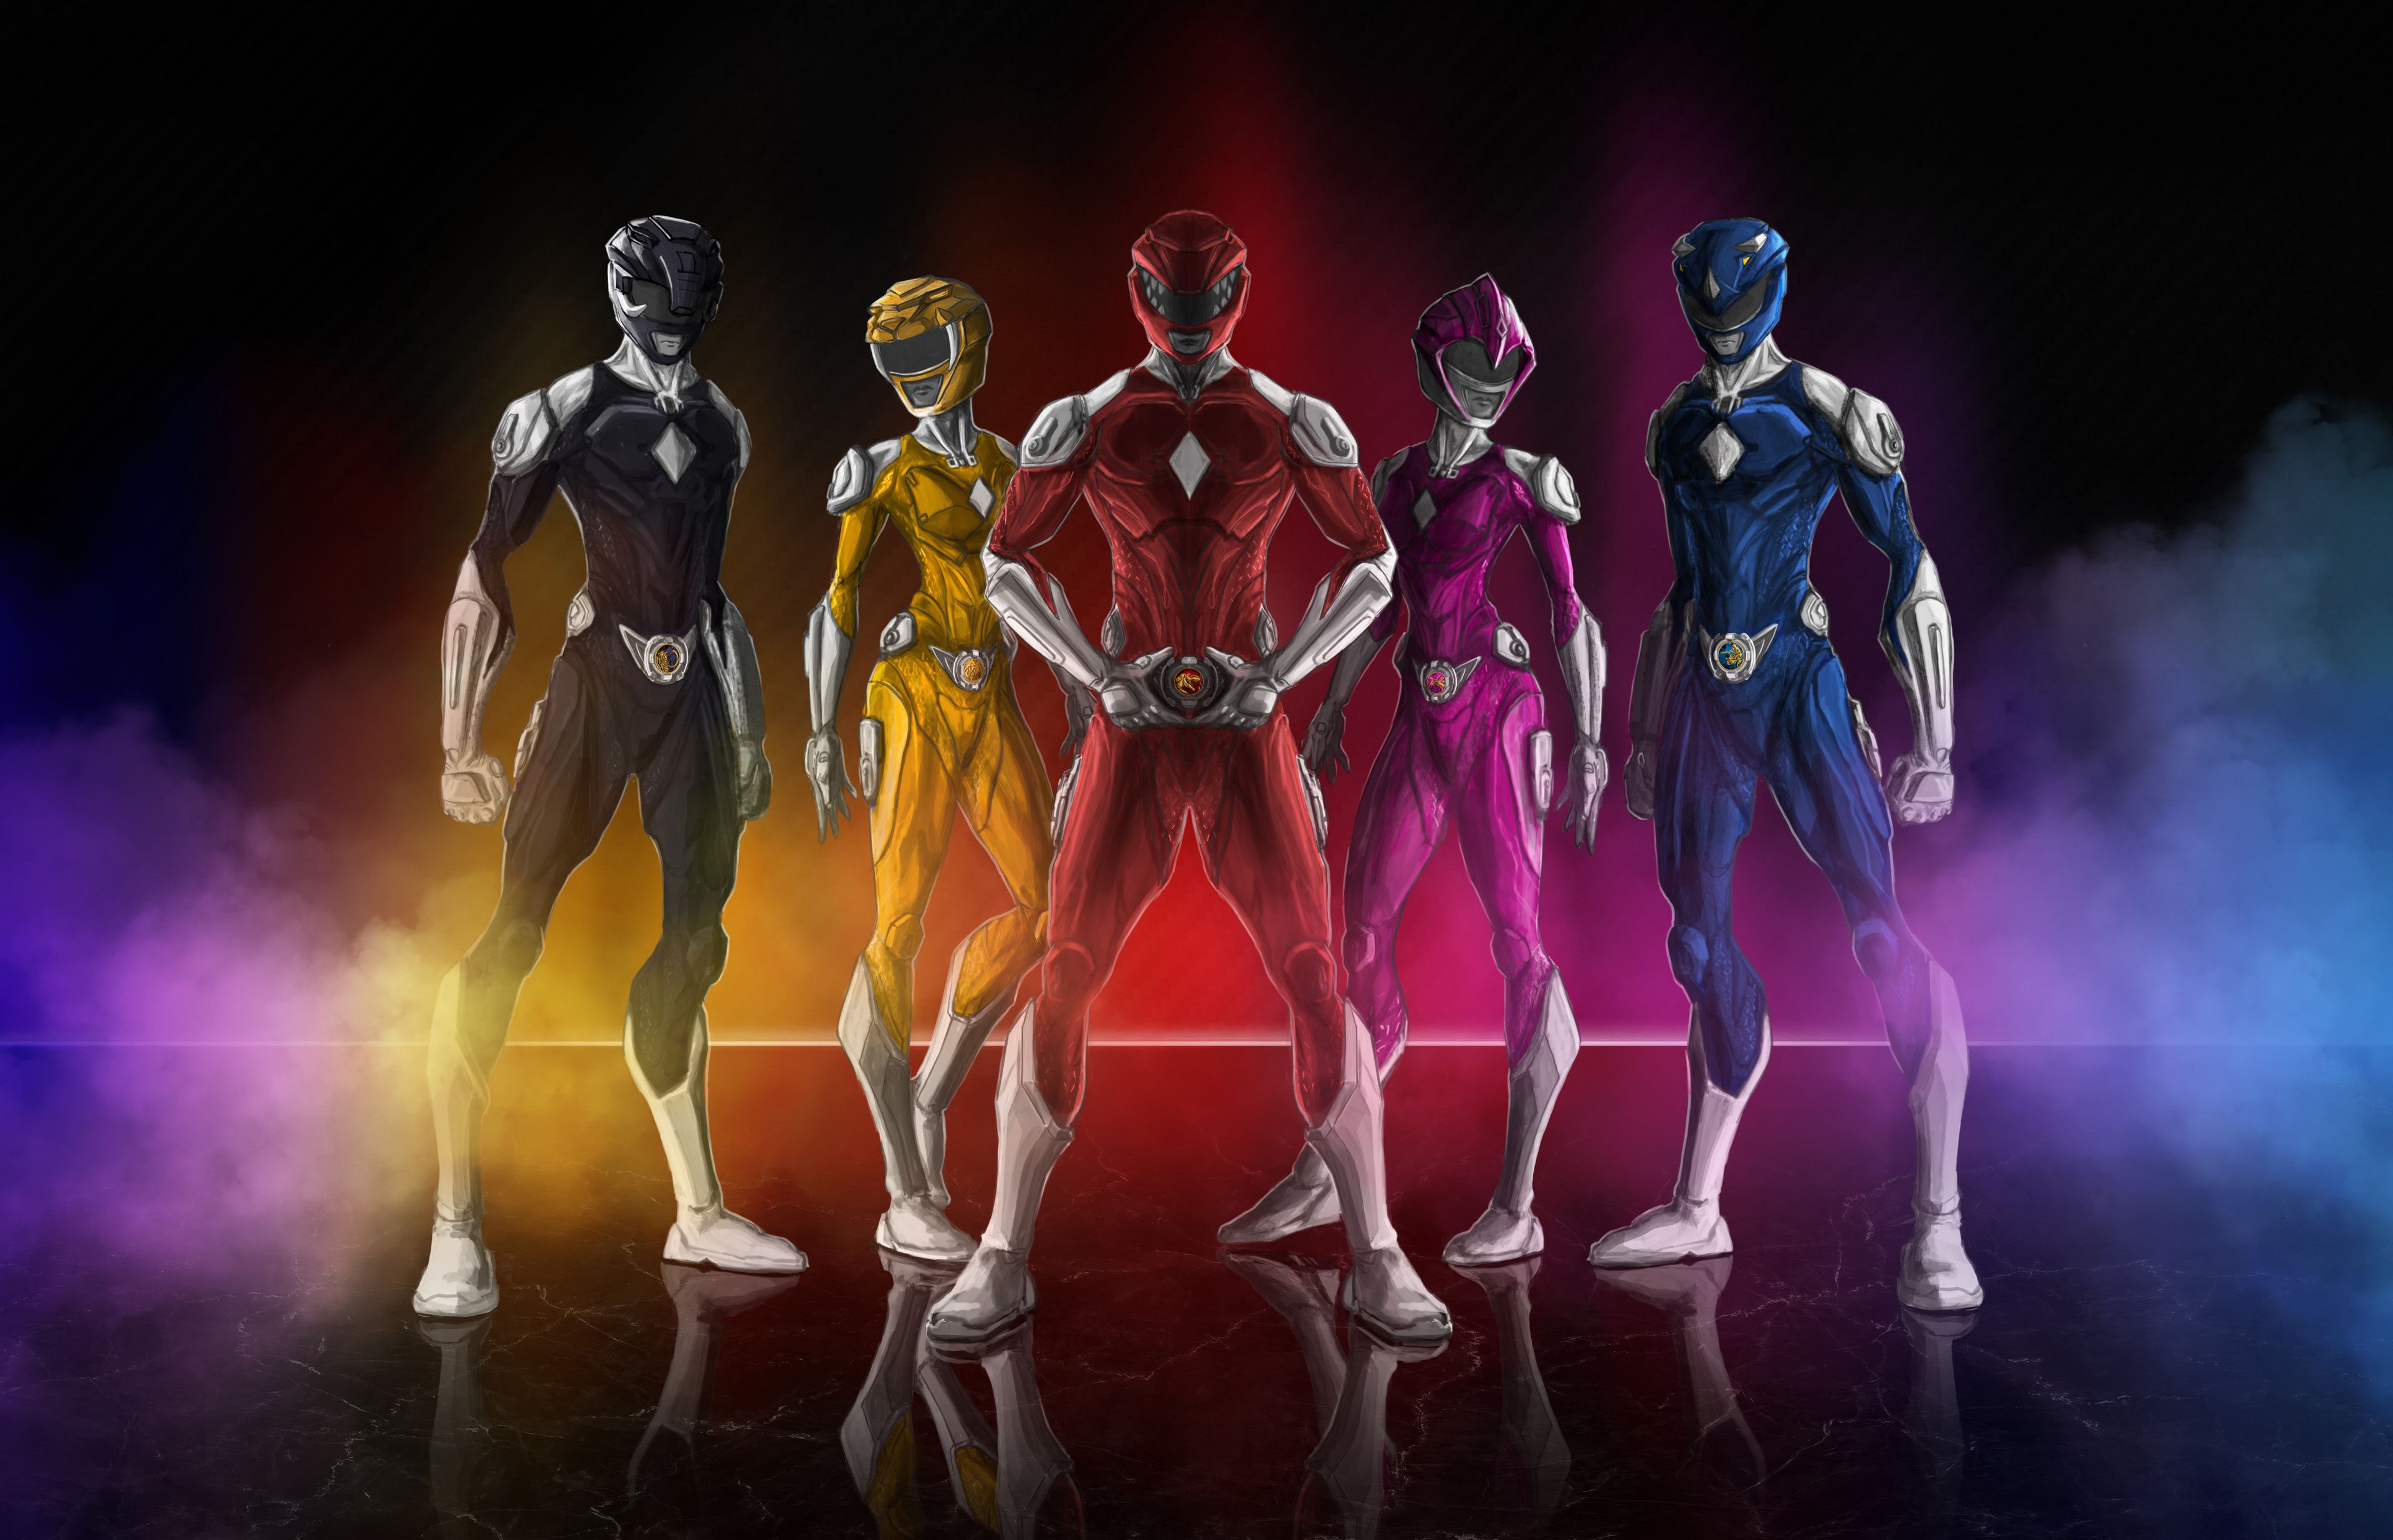 Power Rangers 2020 4k, HD Superheroes, 4k Wallpapers, Image, Backgrounds, P...